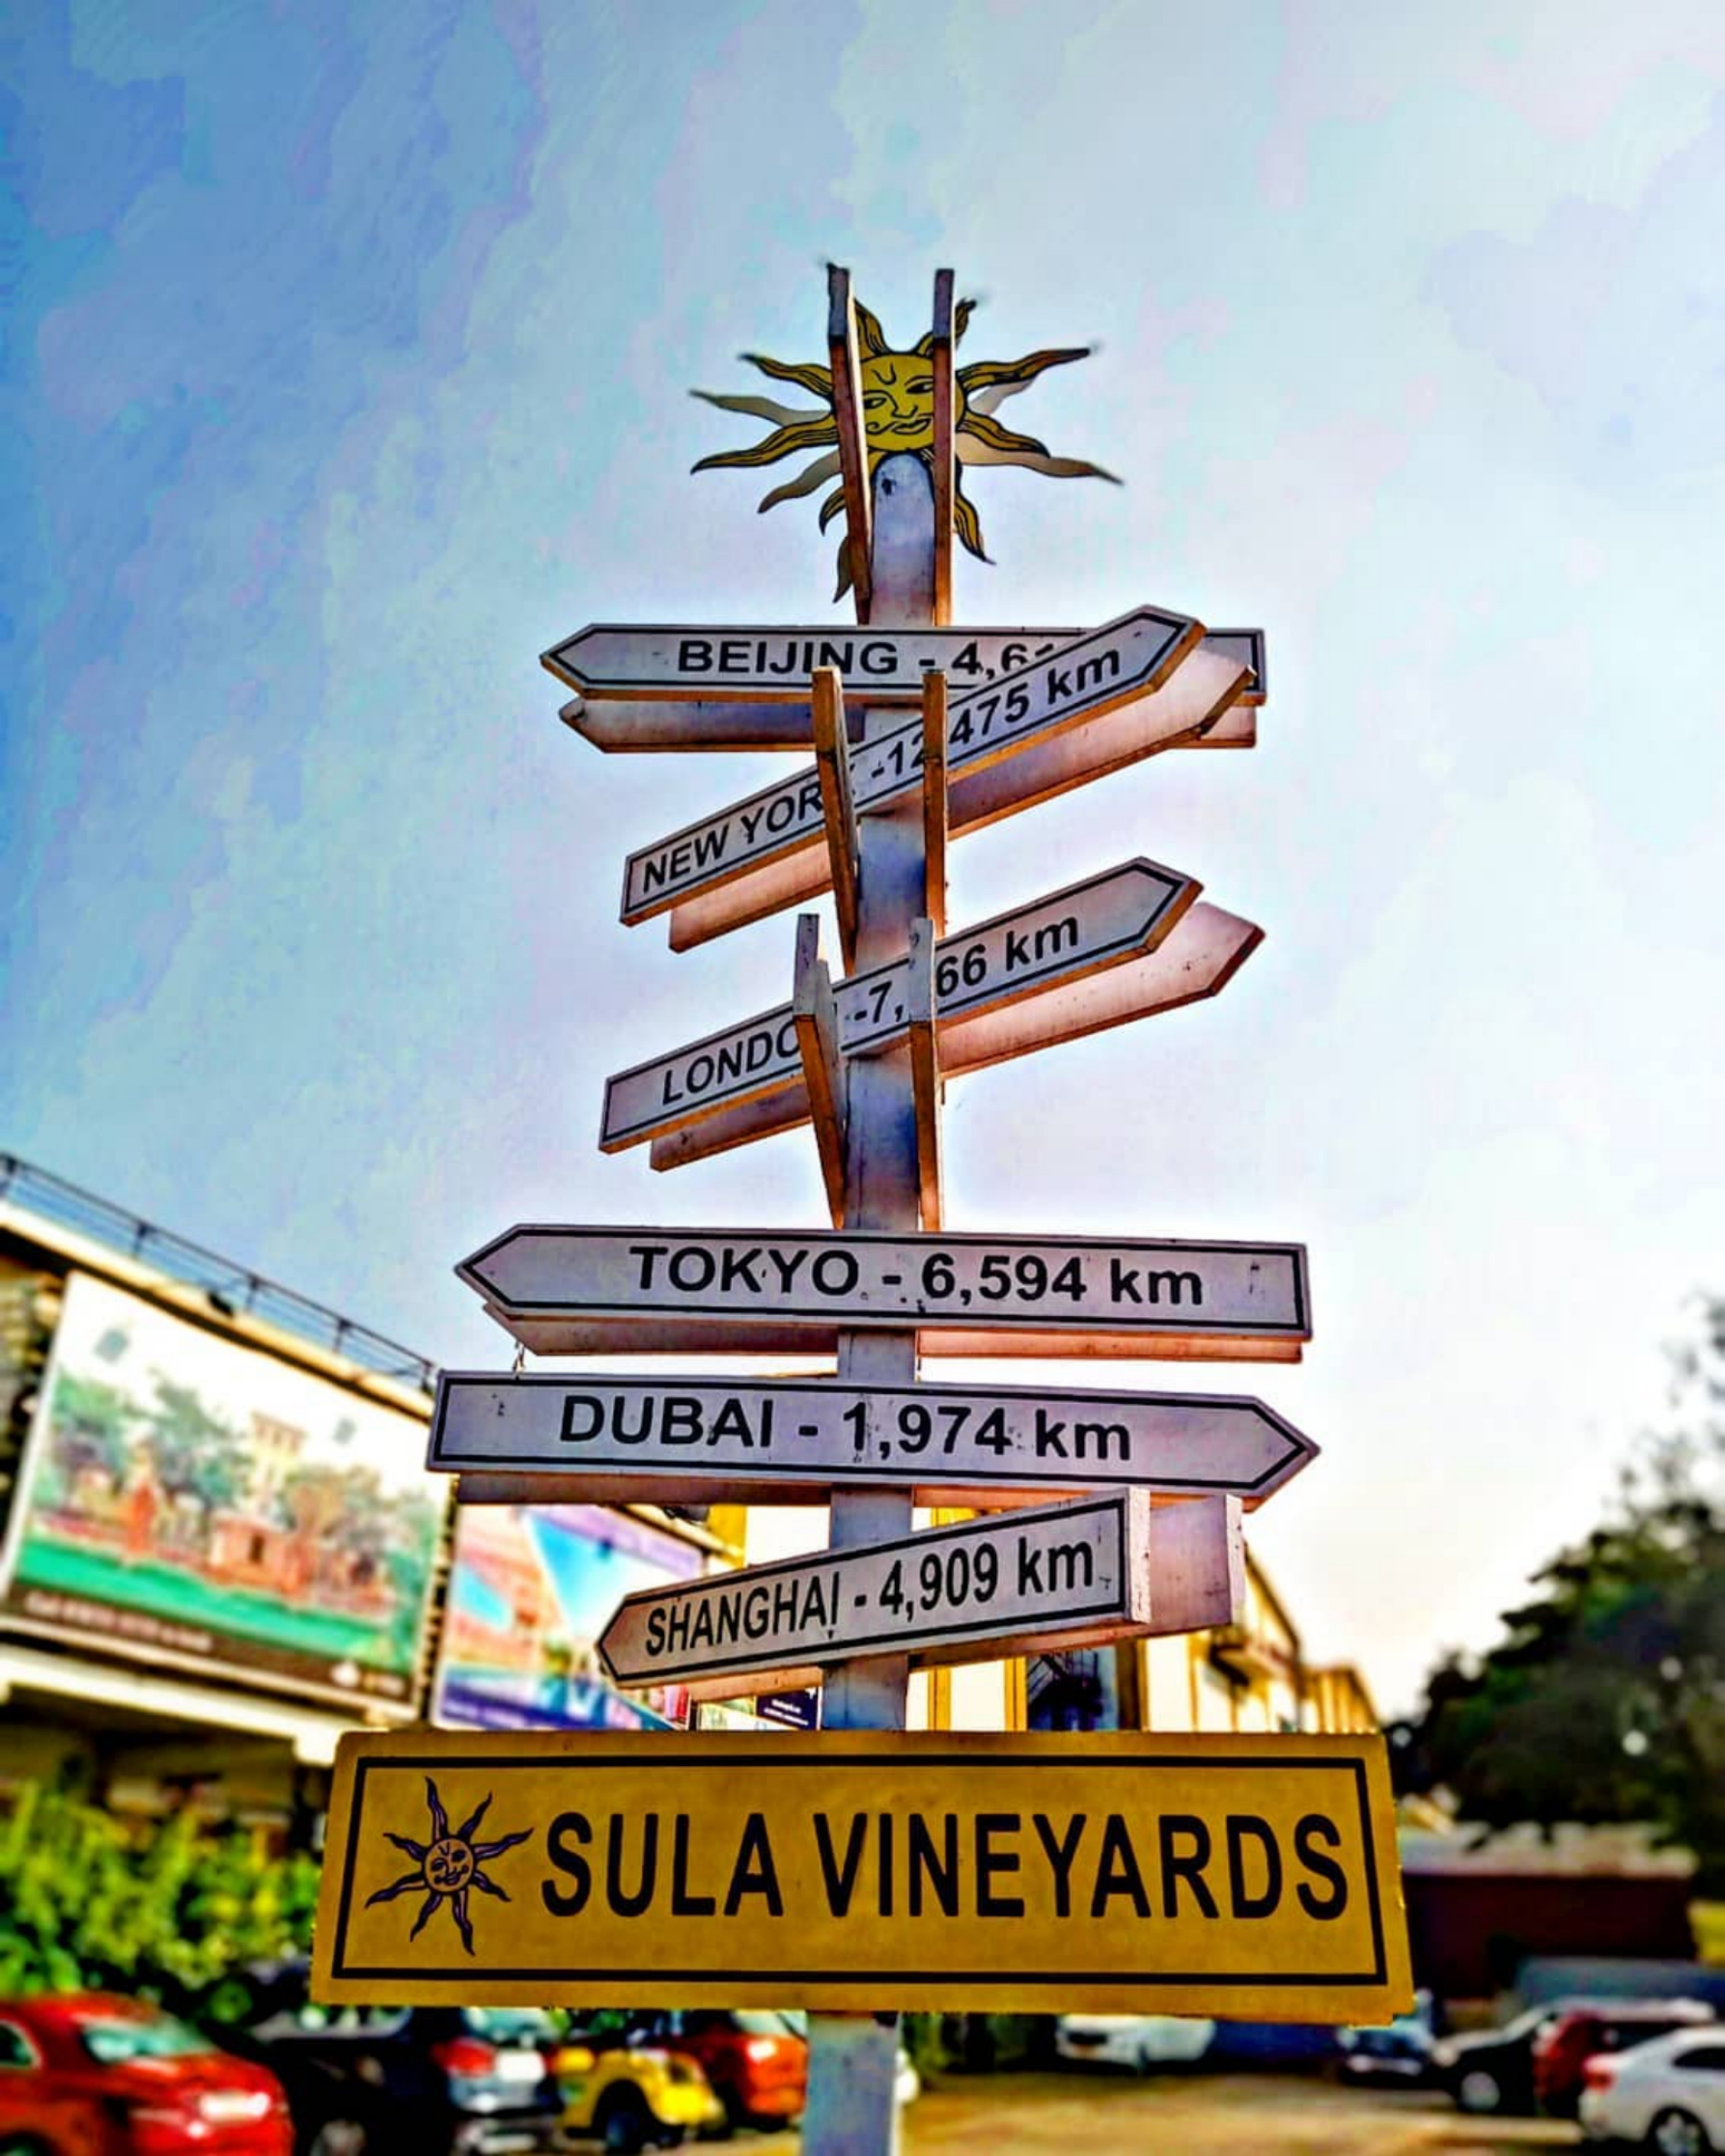 sula vineyards sign board